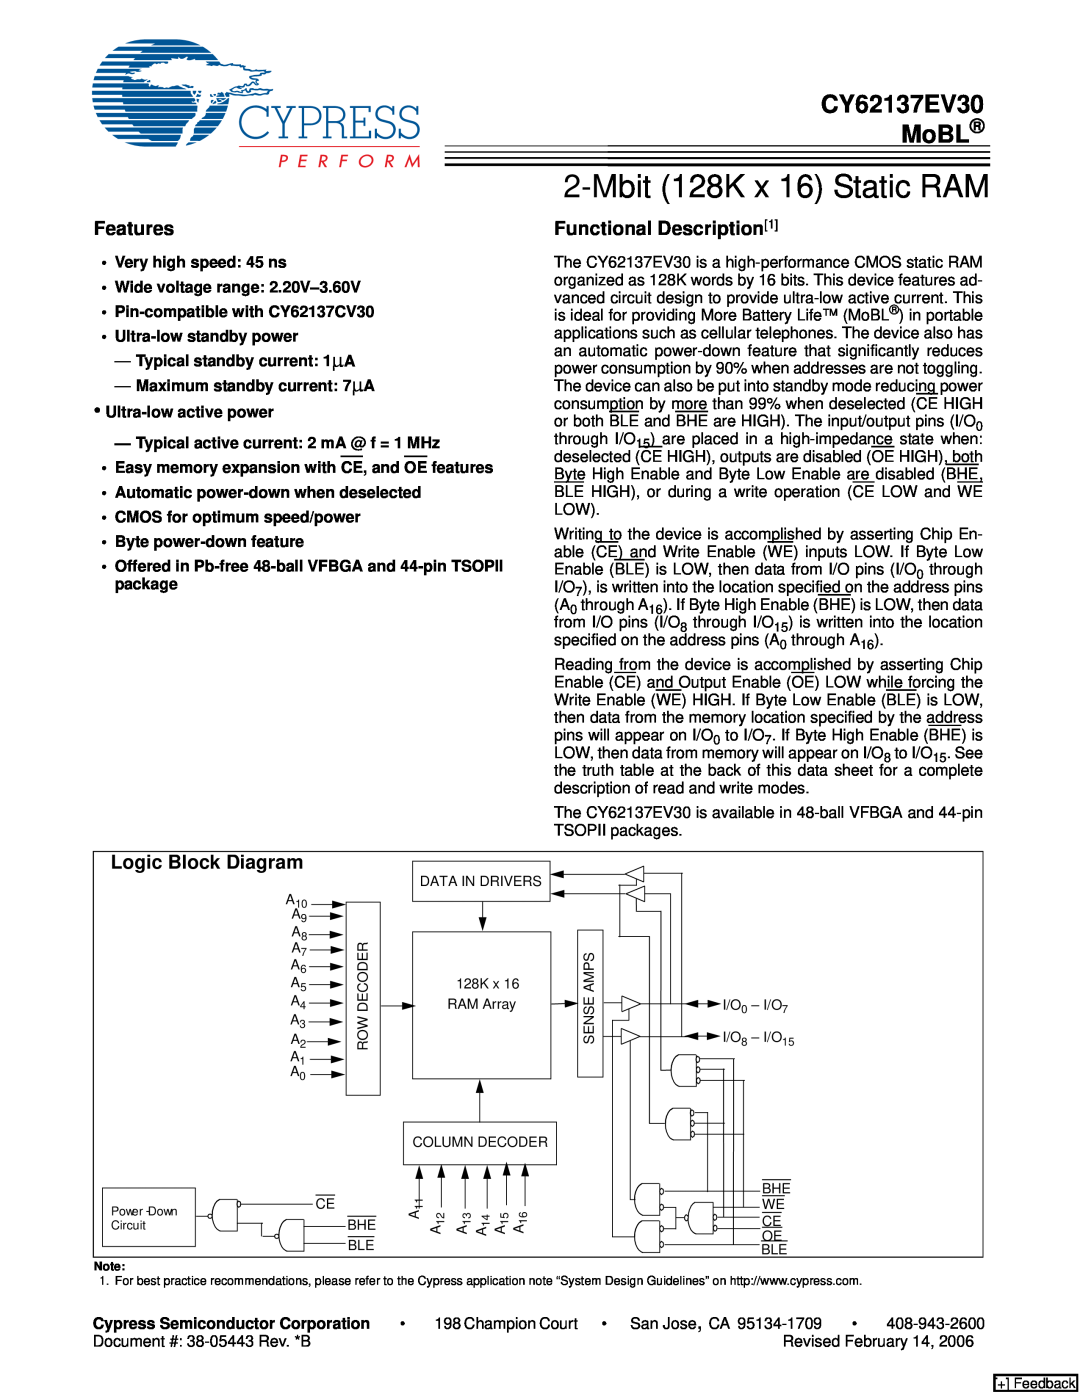 Cypress manual CY62137EV30 MoBL, Features, Functional Description1, Logic Block Diagram, Mbit 128K x 16 Static RAM 